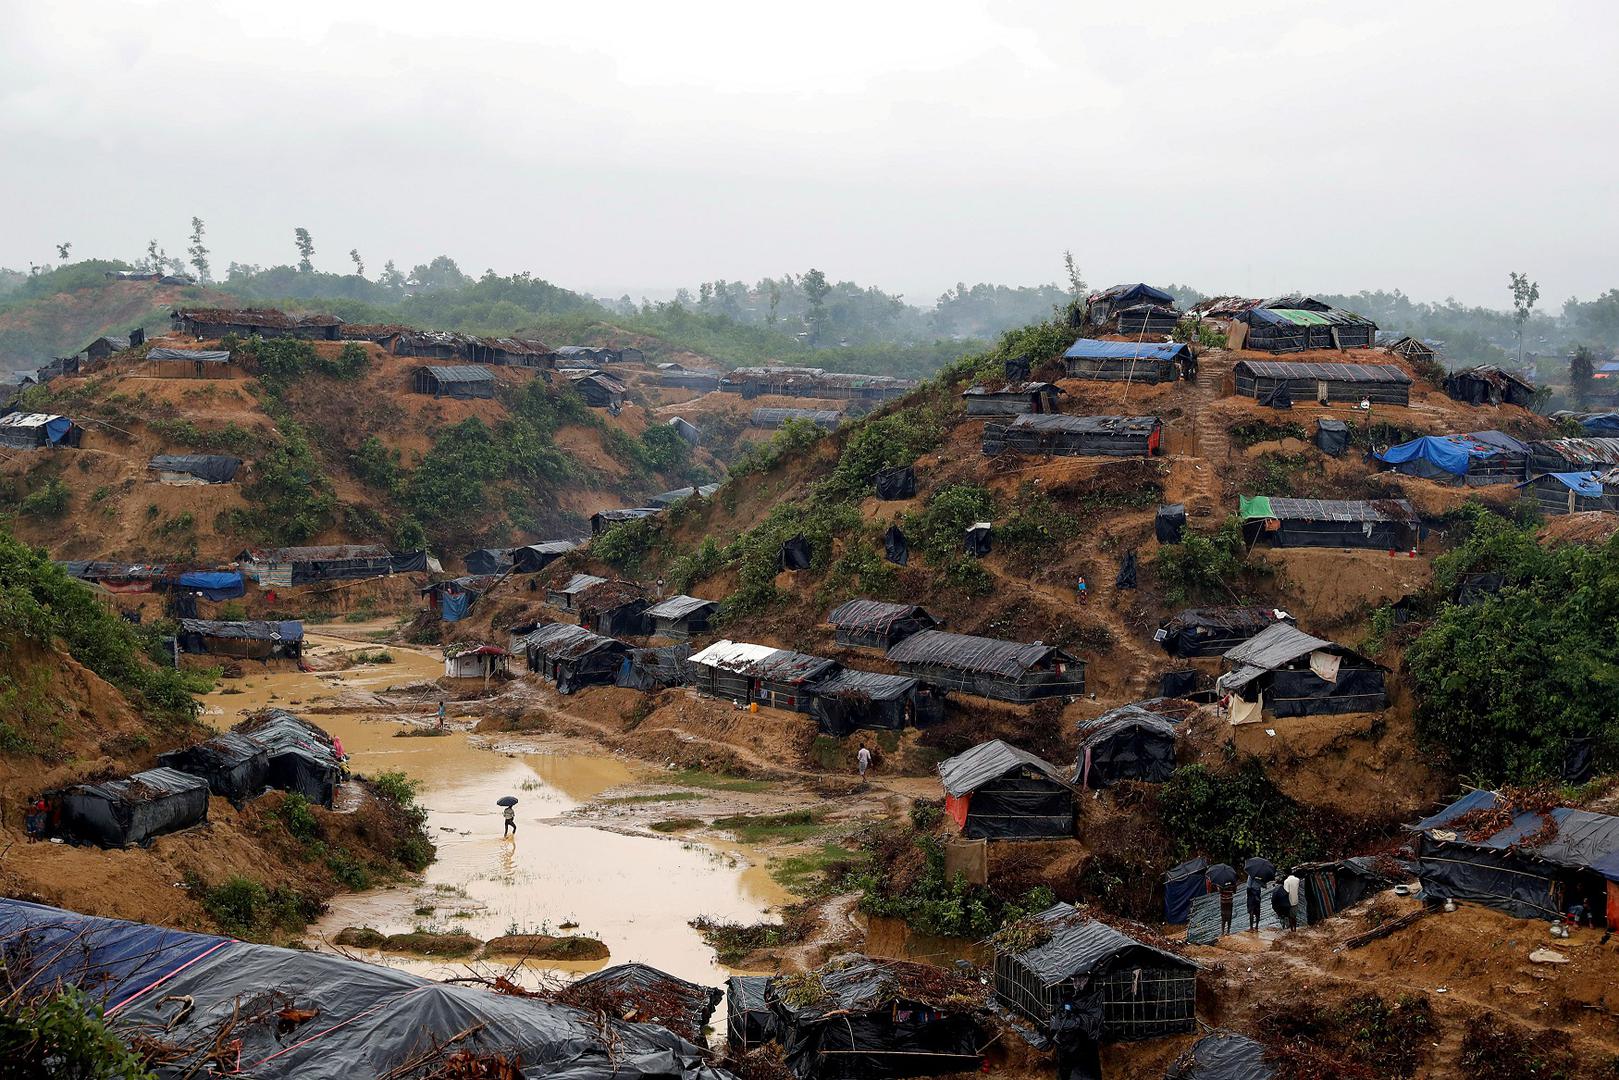 A Rohingya refugee camp in Cox's Bazar, Bangladesh, September 19, 2017. 